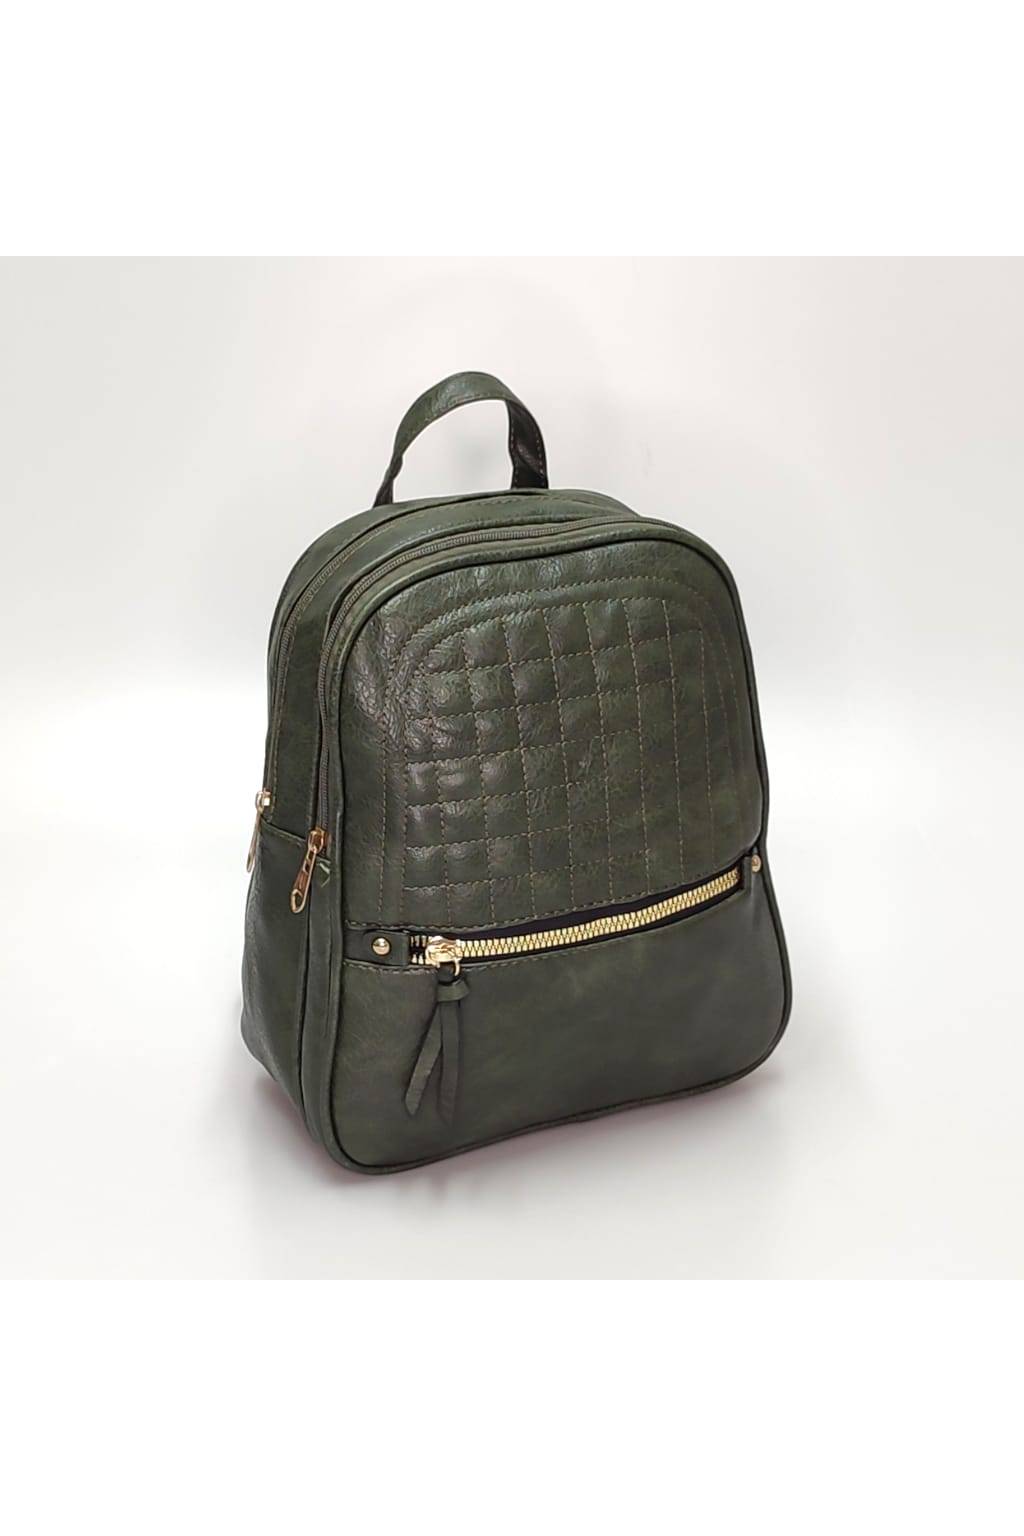 Dámsky ruksak 103 zelený www.kabelky vypredaj (2)